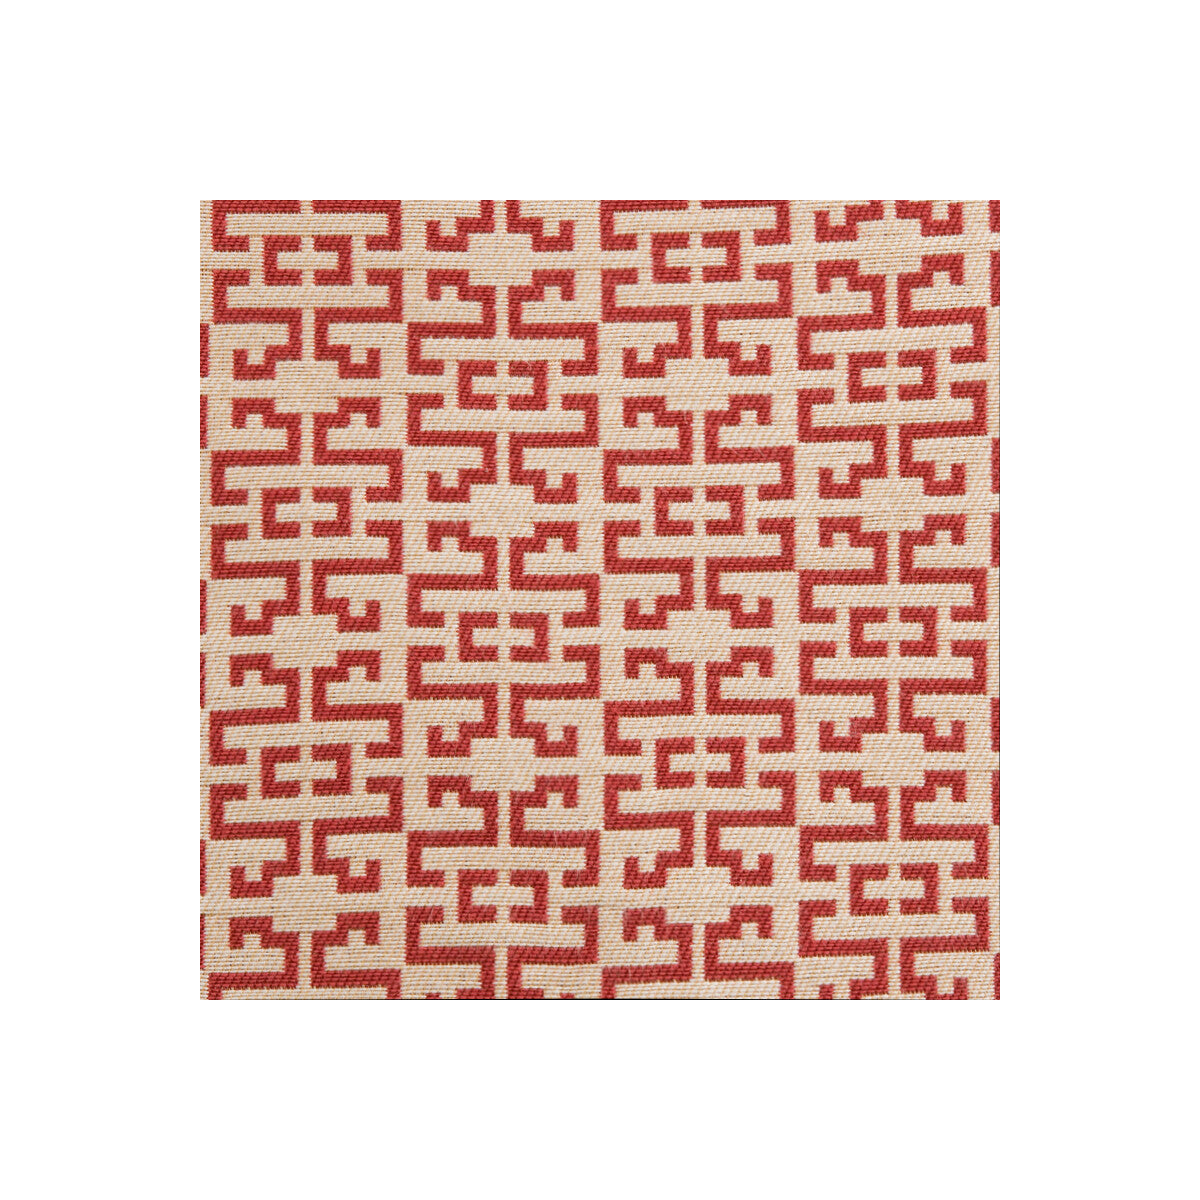 Kravet Smart fabric in 26380-916 color - pattern 26380.916.0 - by Kravet Smart